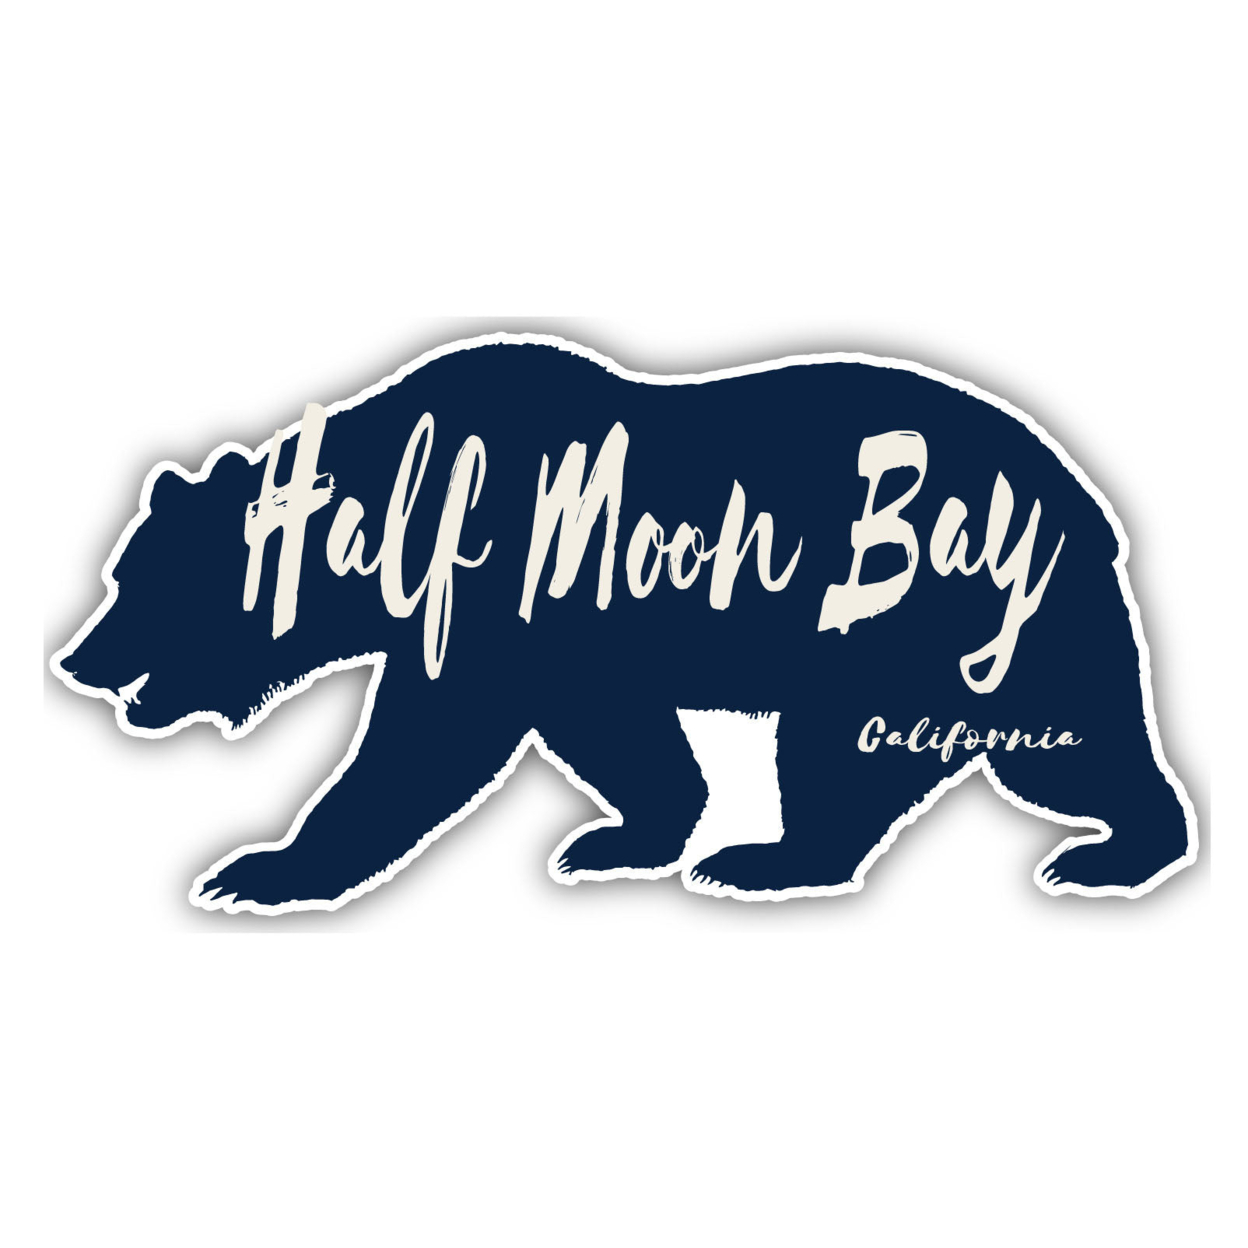 Half Moon Bay California Souvenir Decorative Stickers (Choose Theme And Size) - Single Unit, 6-Inch, Camp Life